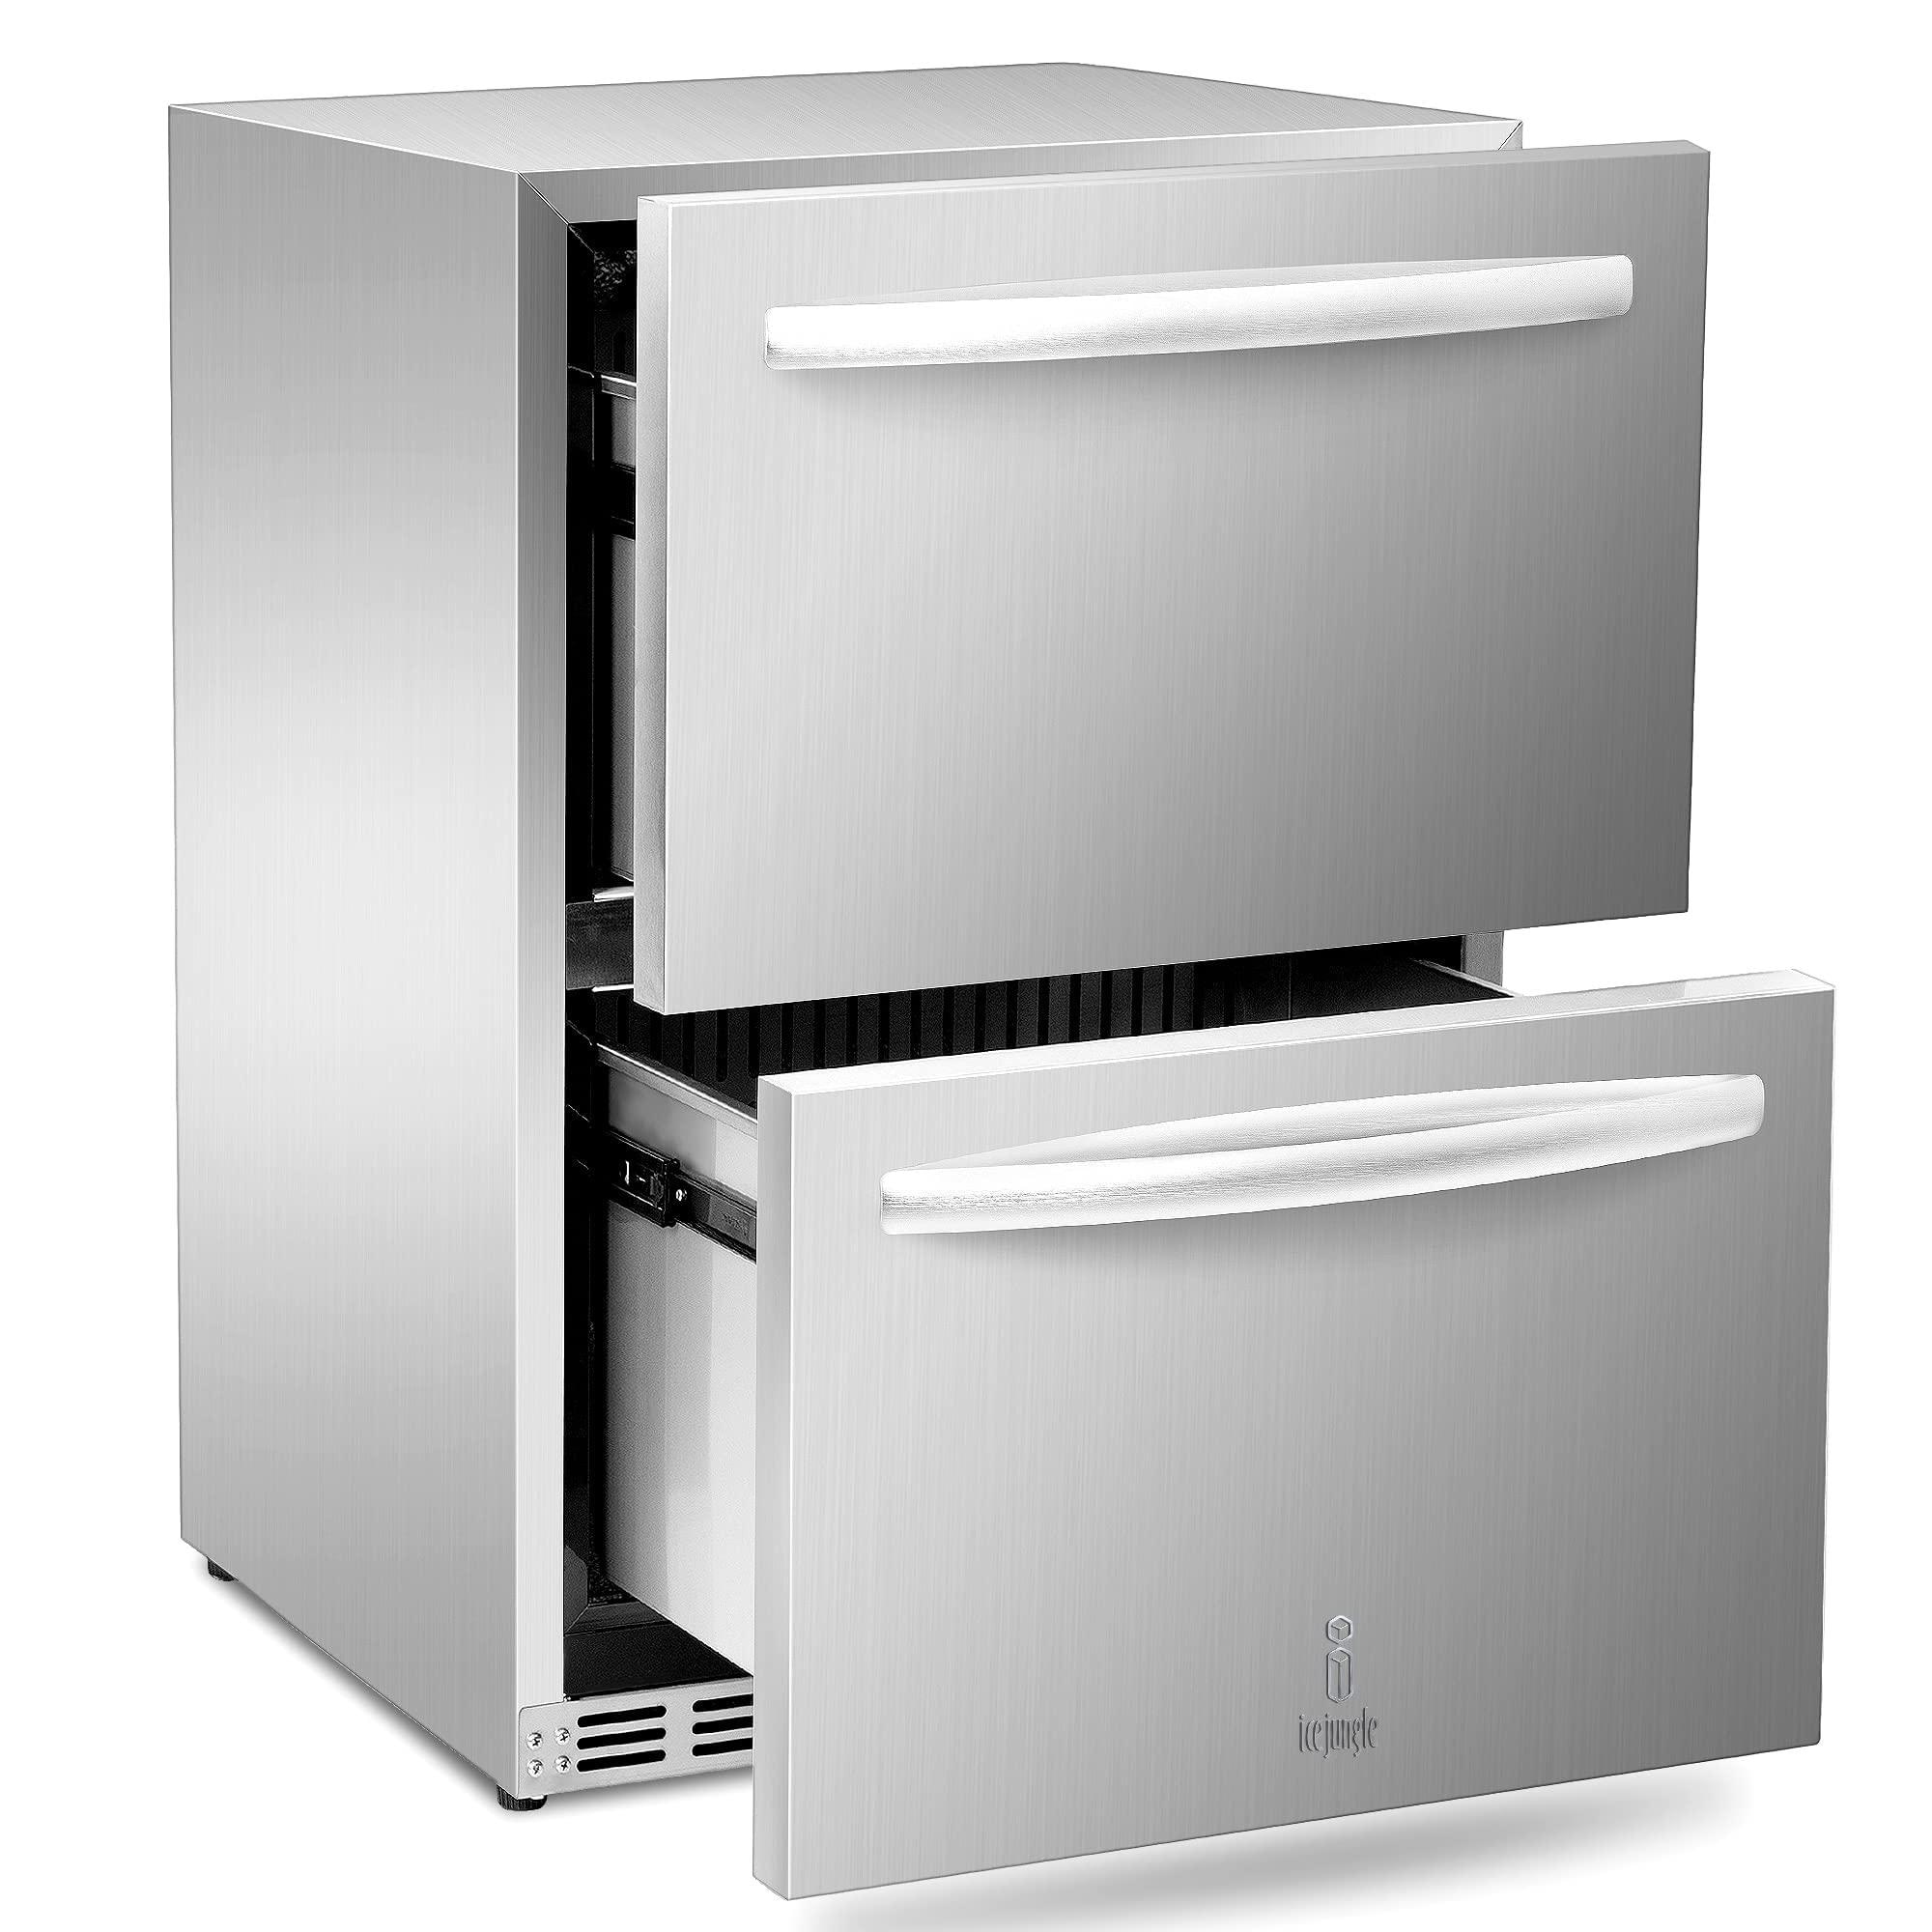 YUKOOL Stainless Steel Undercounter Refrigerator, Undercounter Drawer Refrigerator With Digital Display